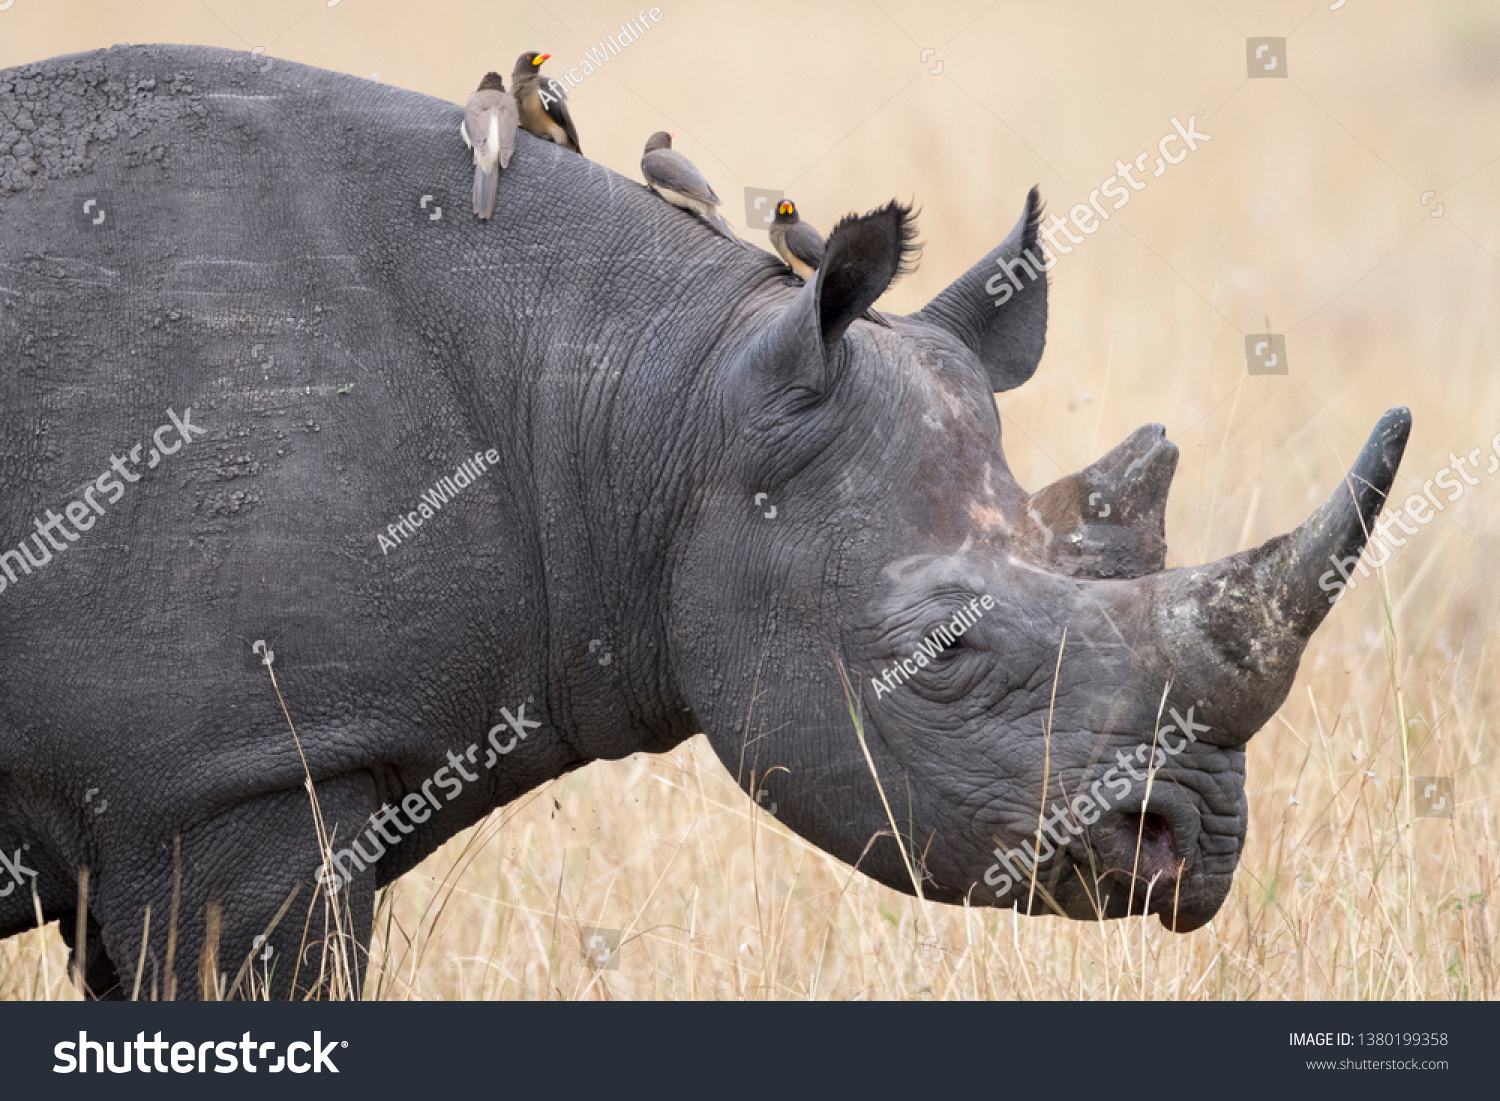 носорогу в жопе голова фото 65